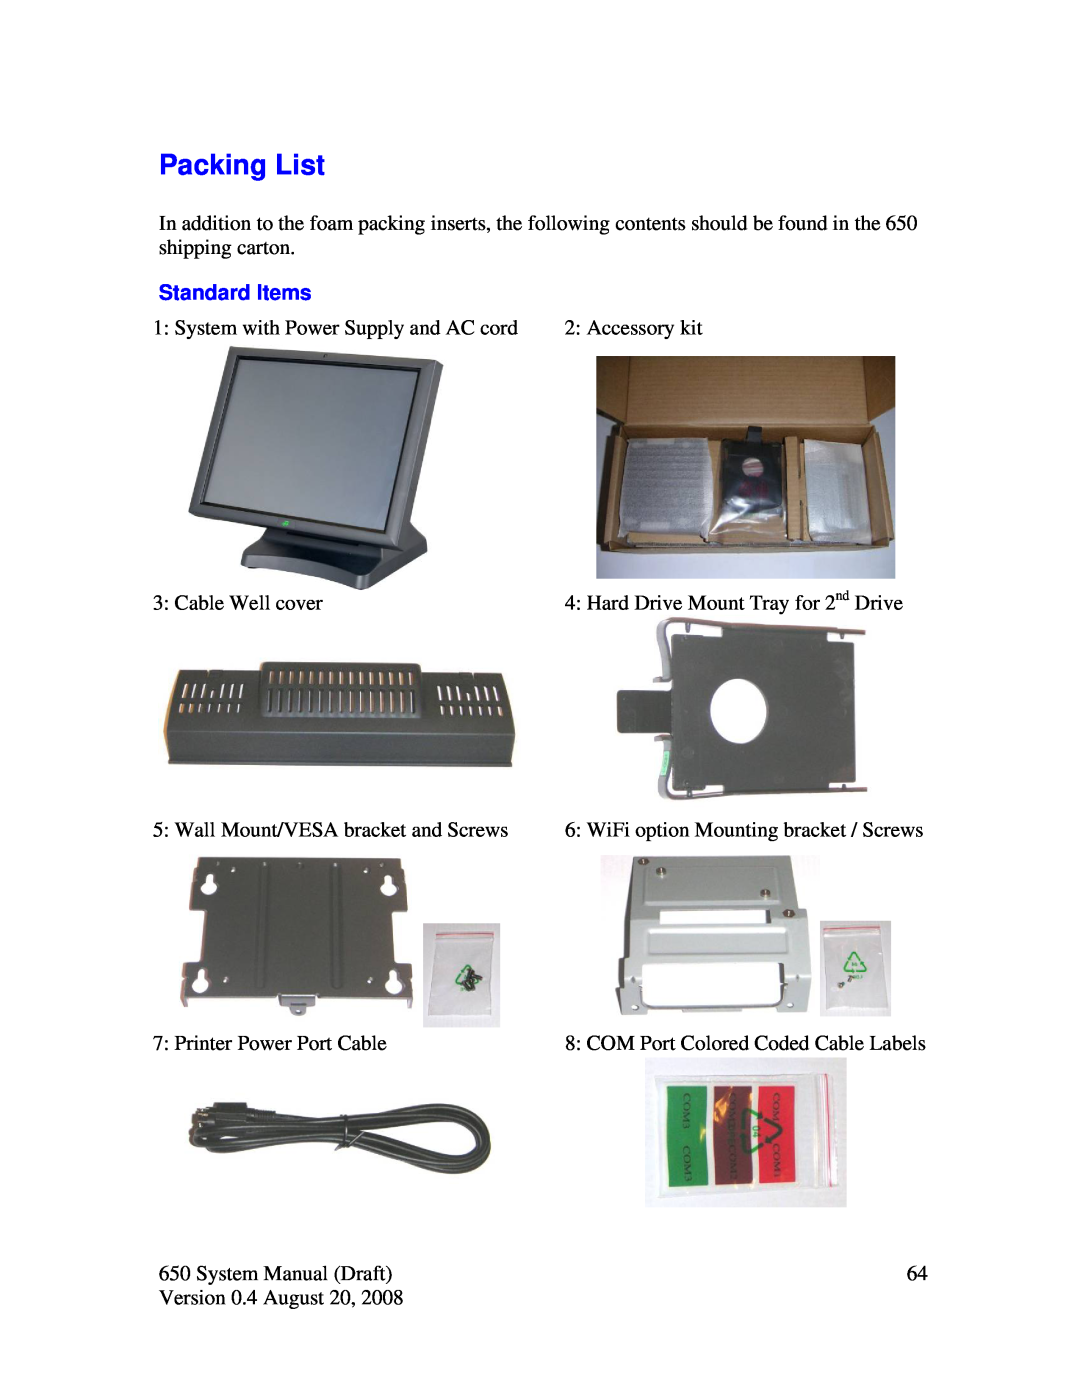 Intel J2 650 system manual Packing List, Standard Items 